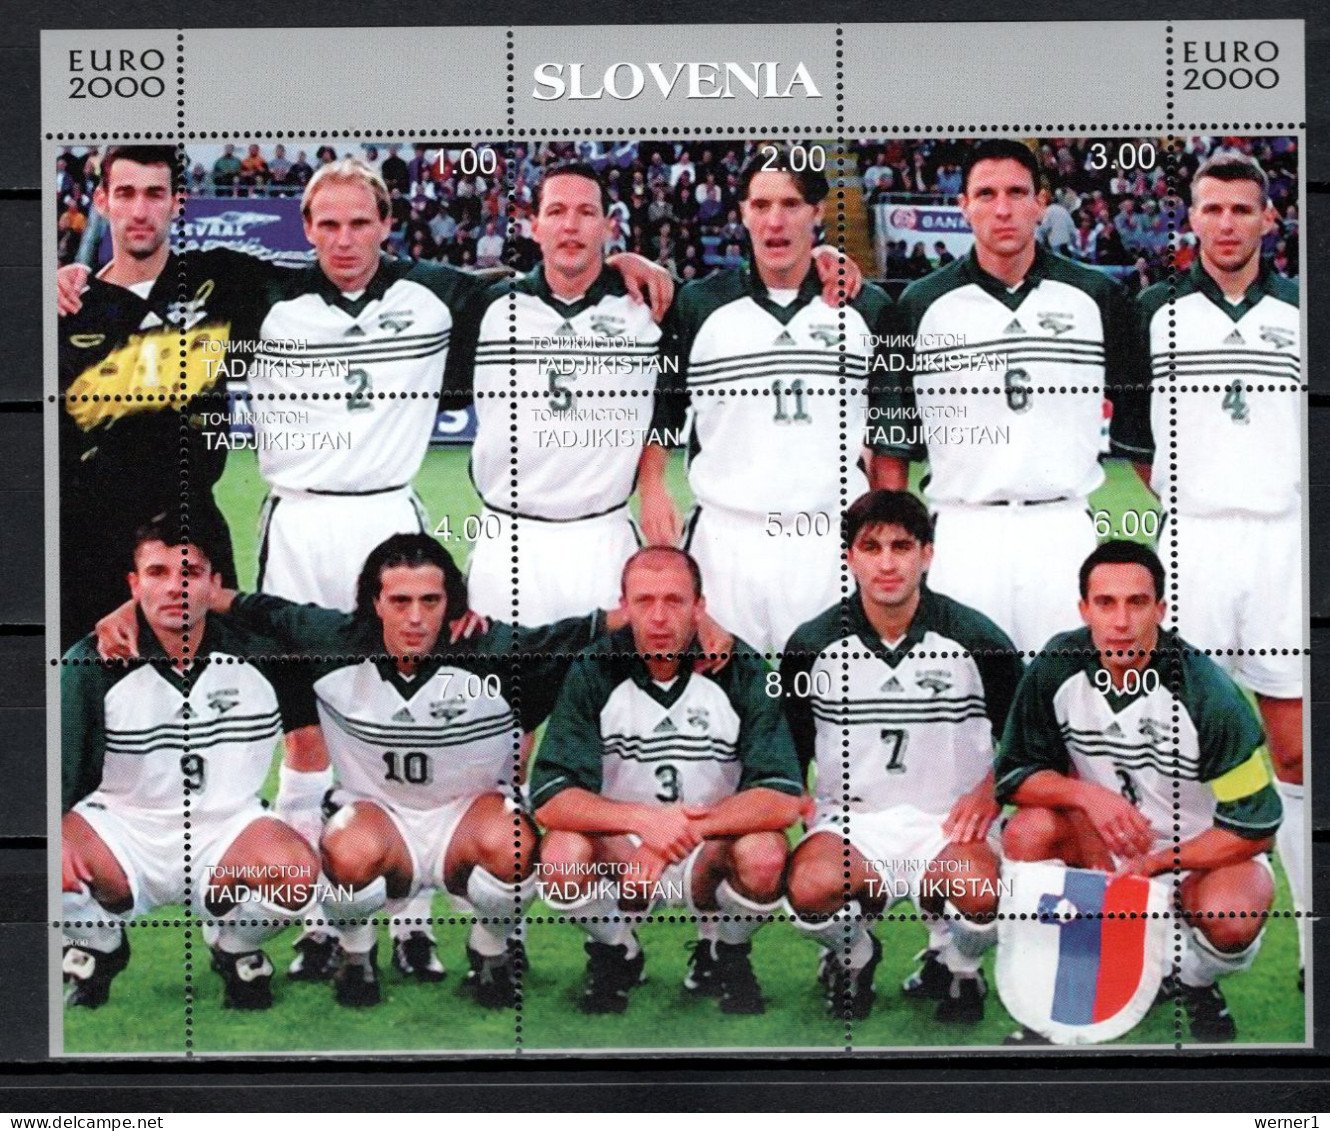 Tadzikistan 2000 Football Soccer European Championship, Sheetlet With Slovenia Team MNH - Championnat D'Europe (UEFA)